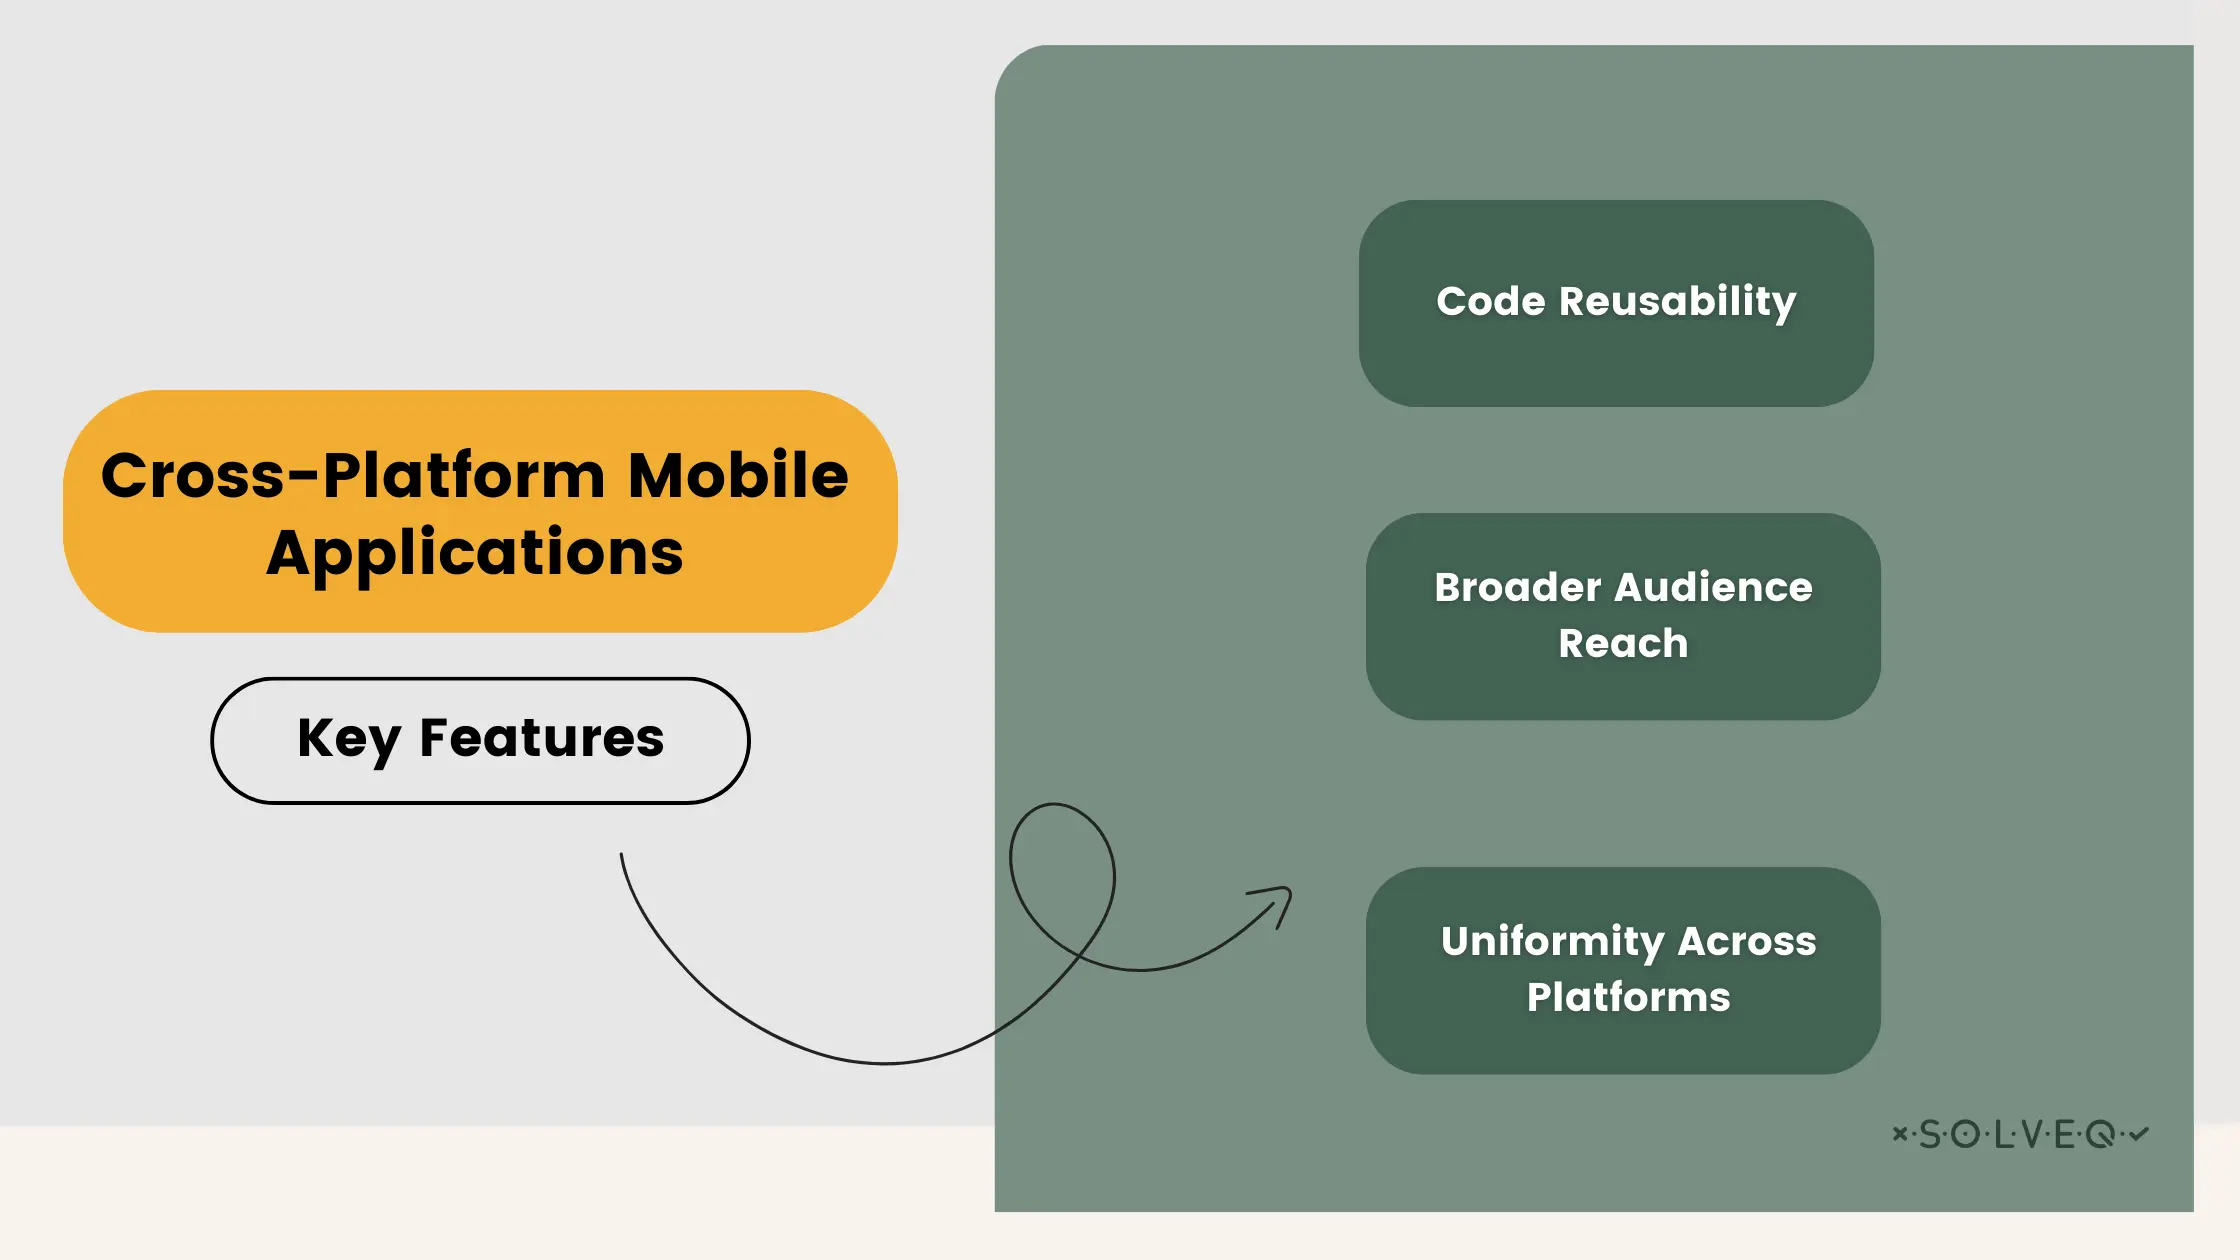 Cross-Platform Mobile Application: Key Features